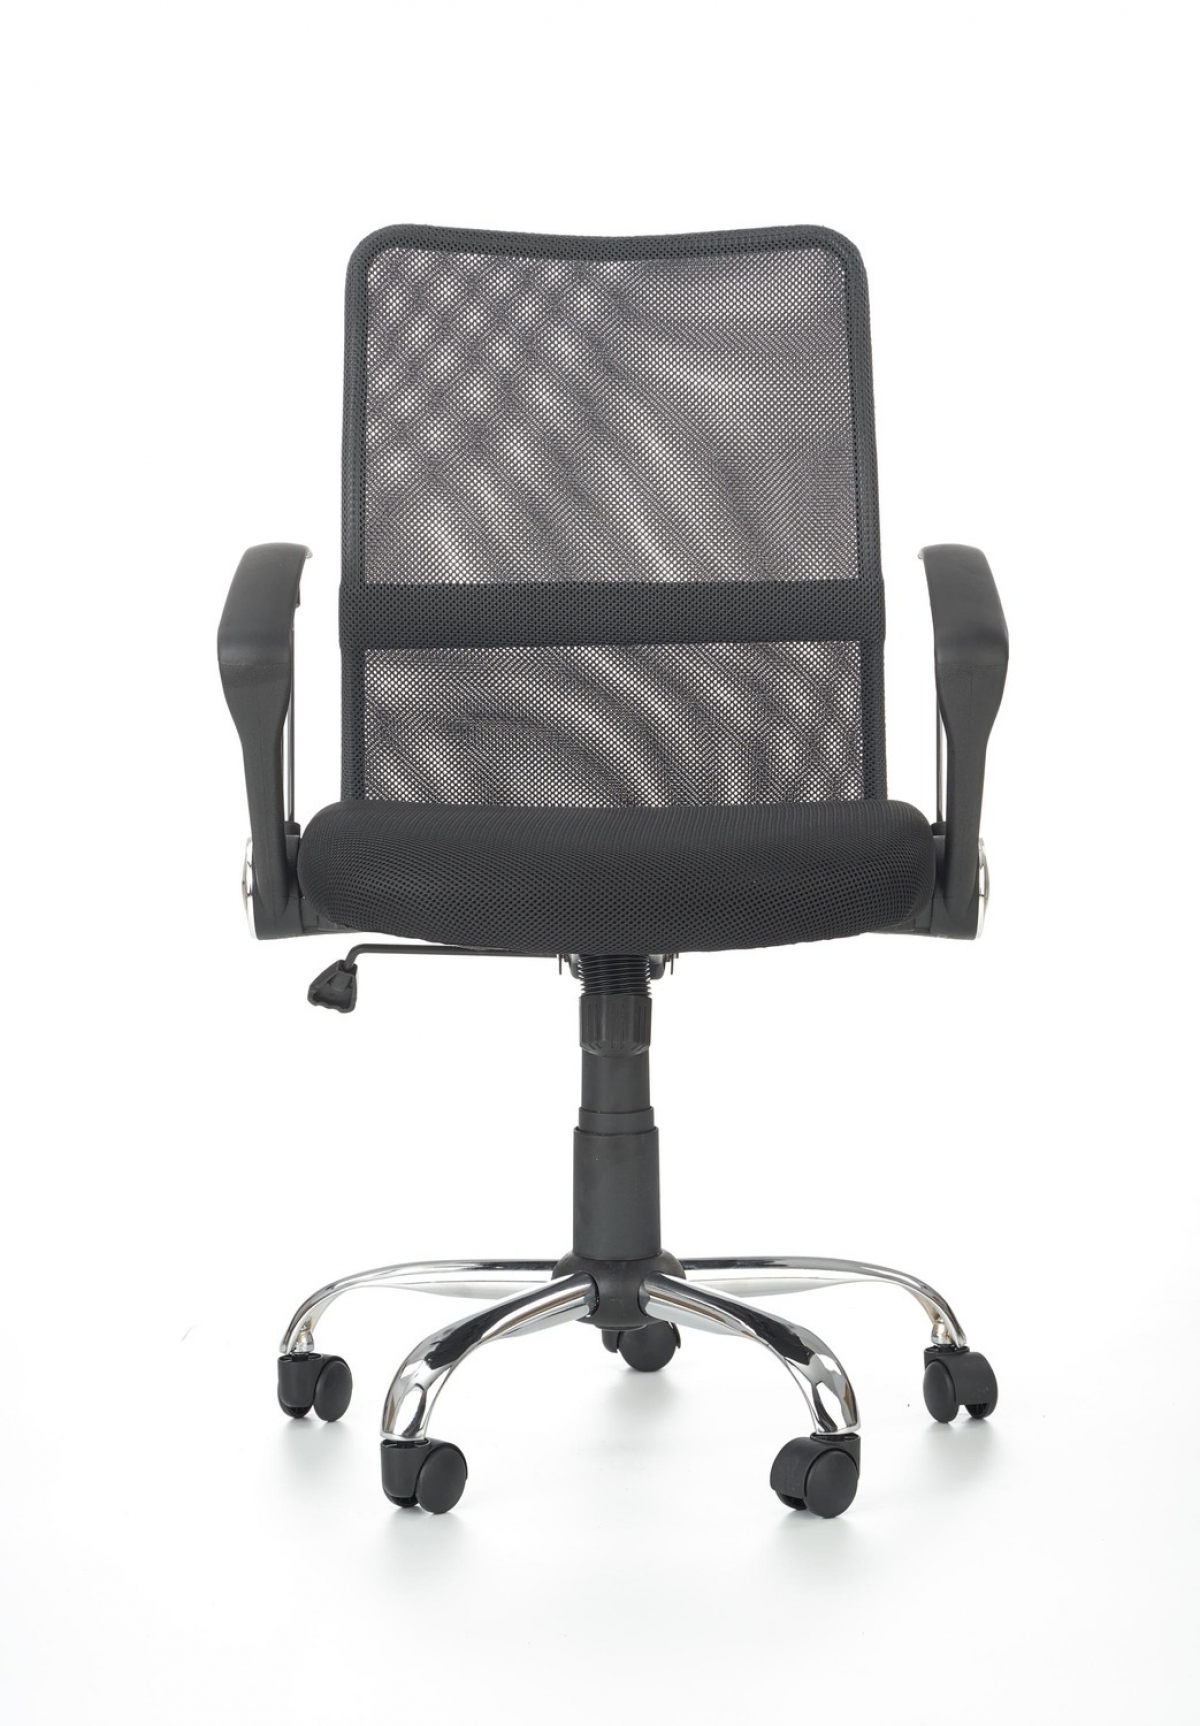 Tony irodai szék - fekete Fekete Křeslo do iroda